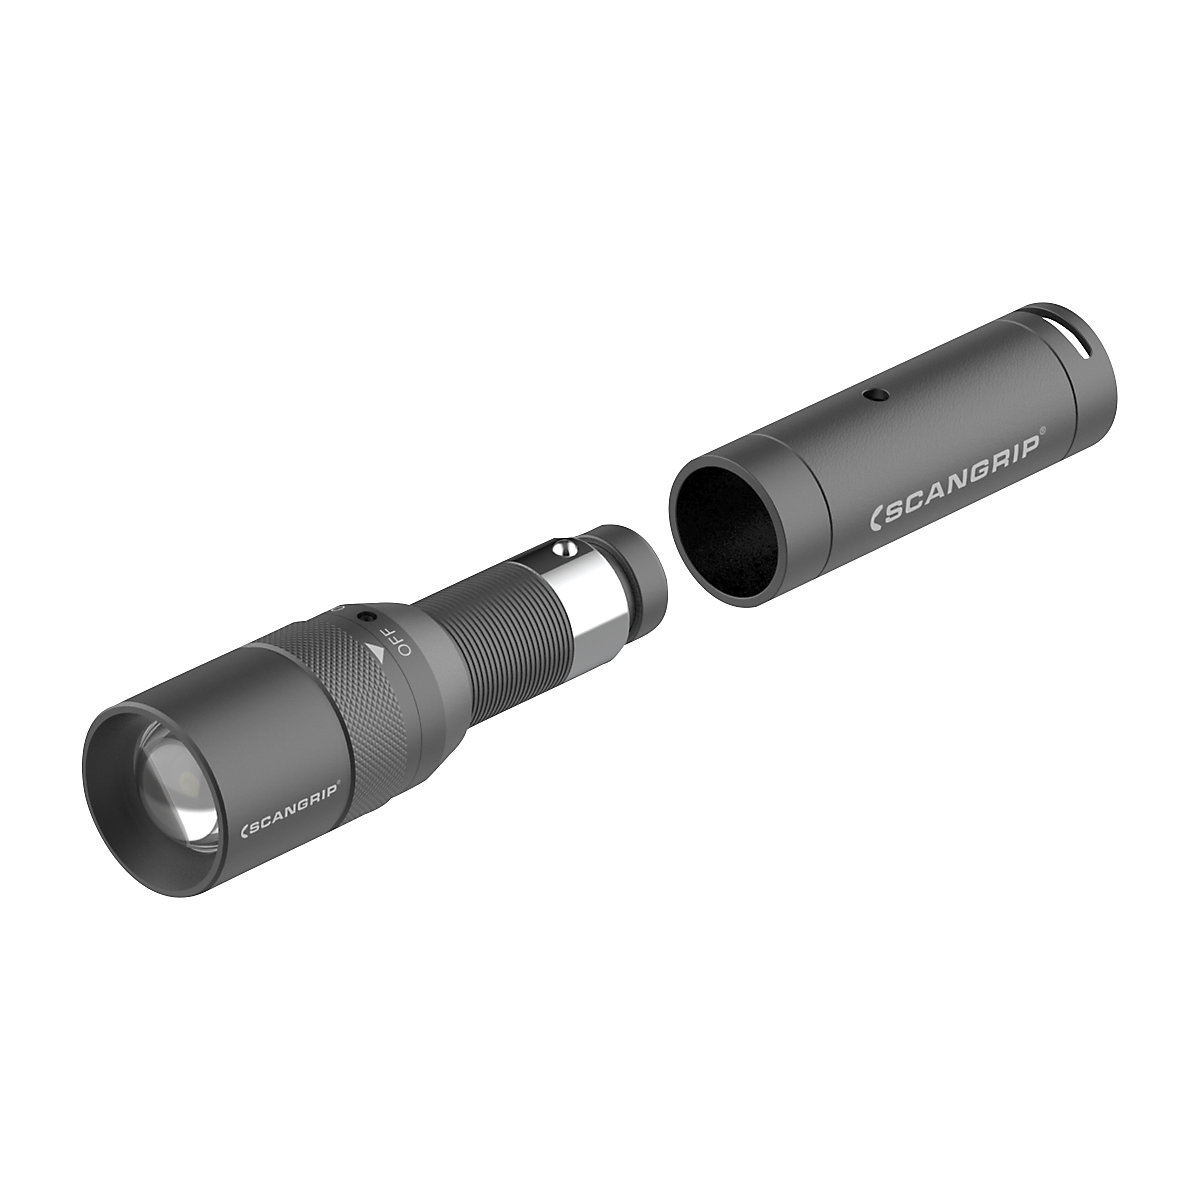 FLASH 12 – 24 V rechargeable LED flashlight – SCANGRIP